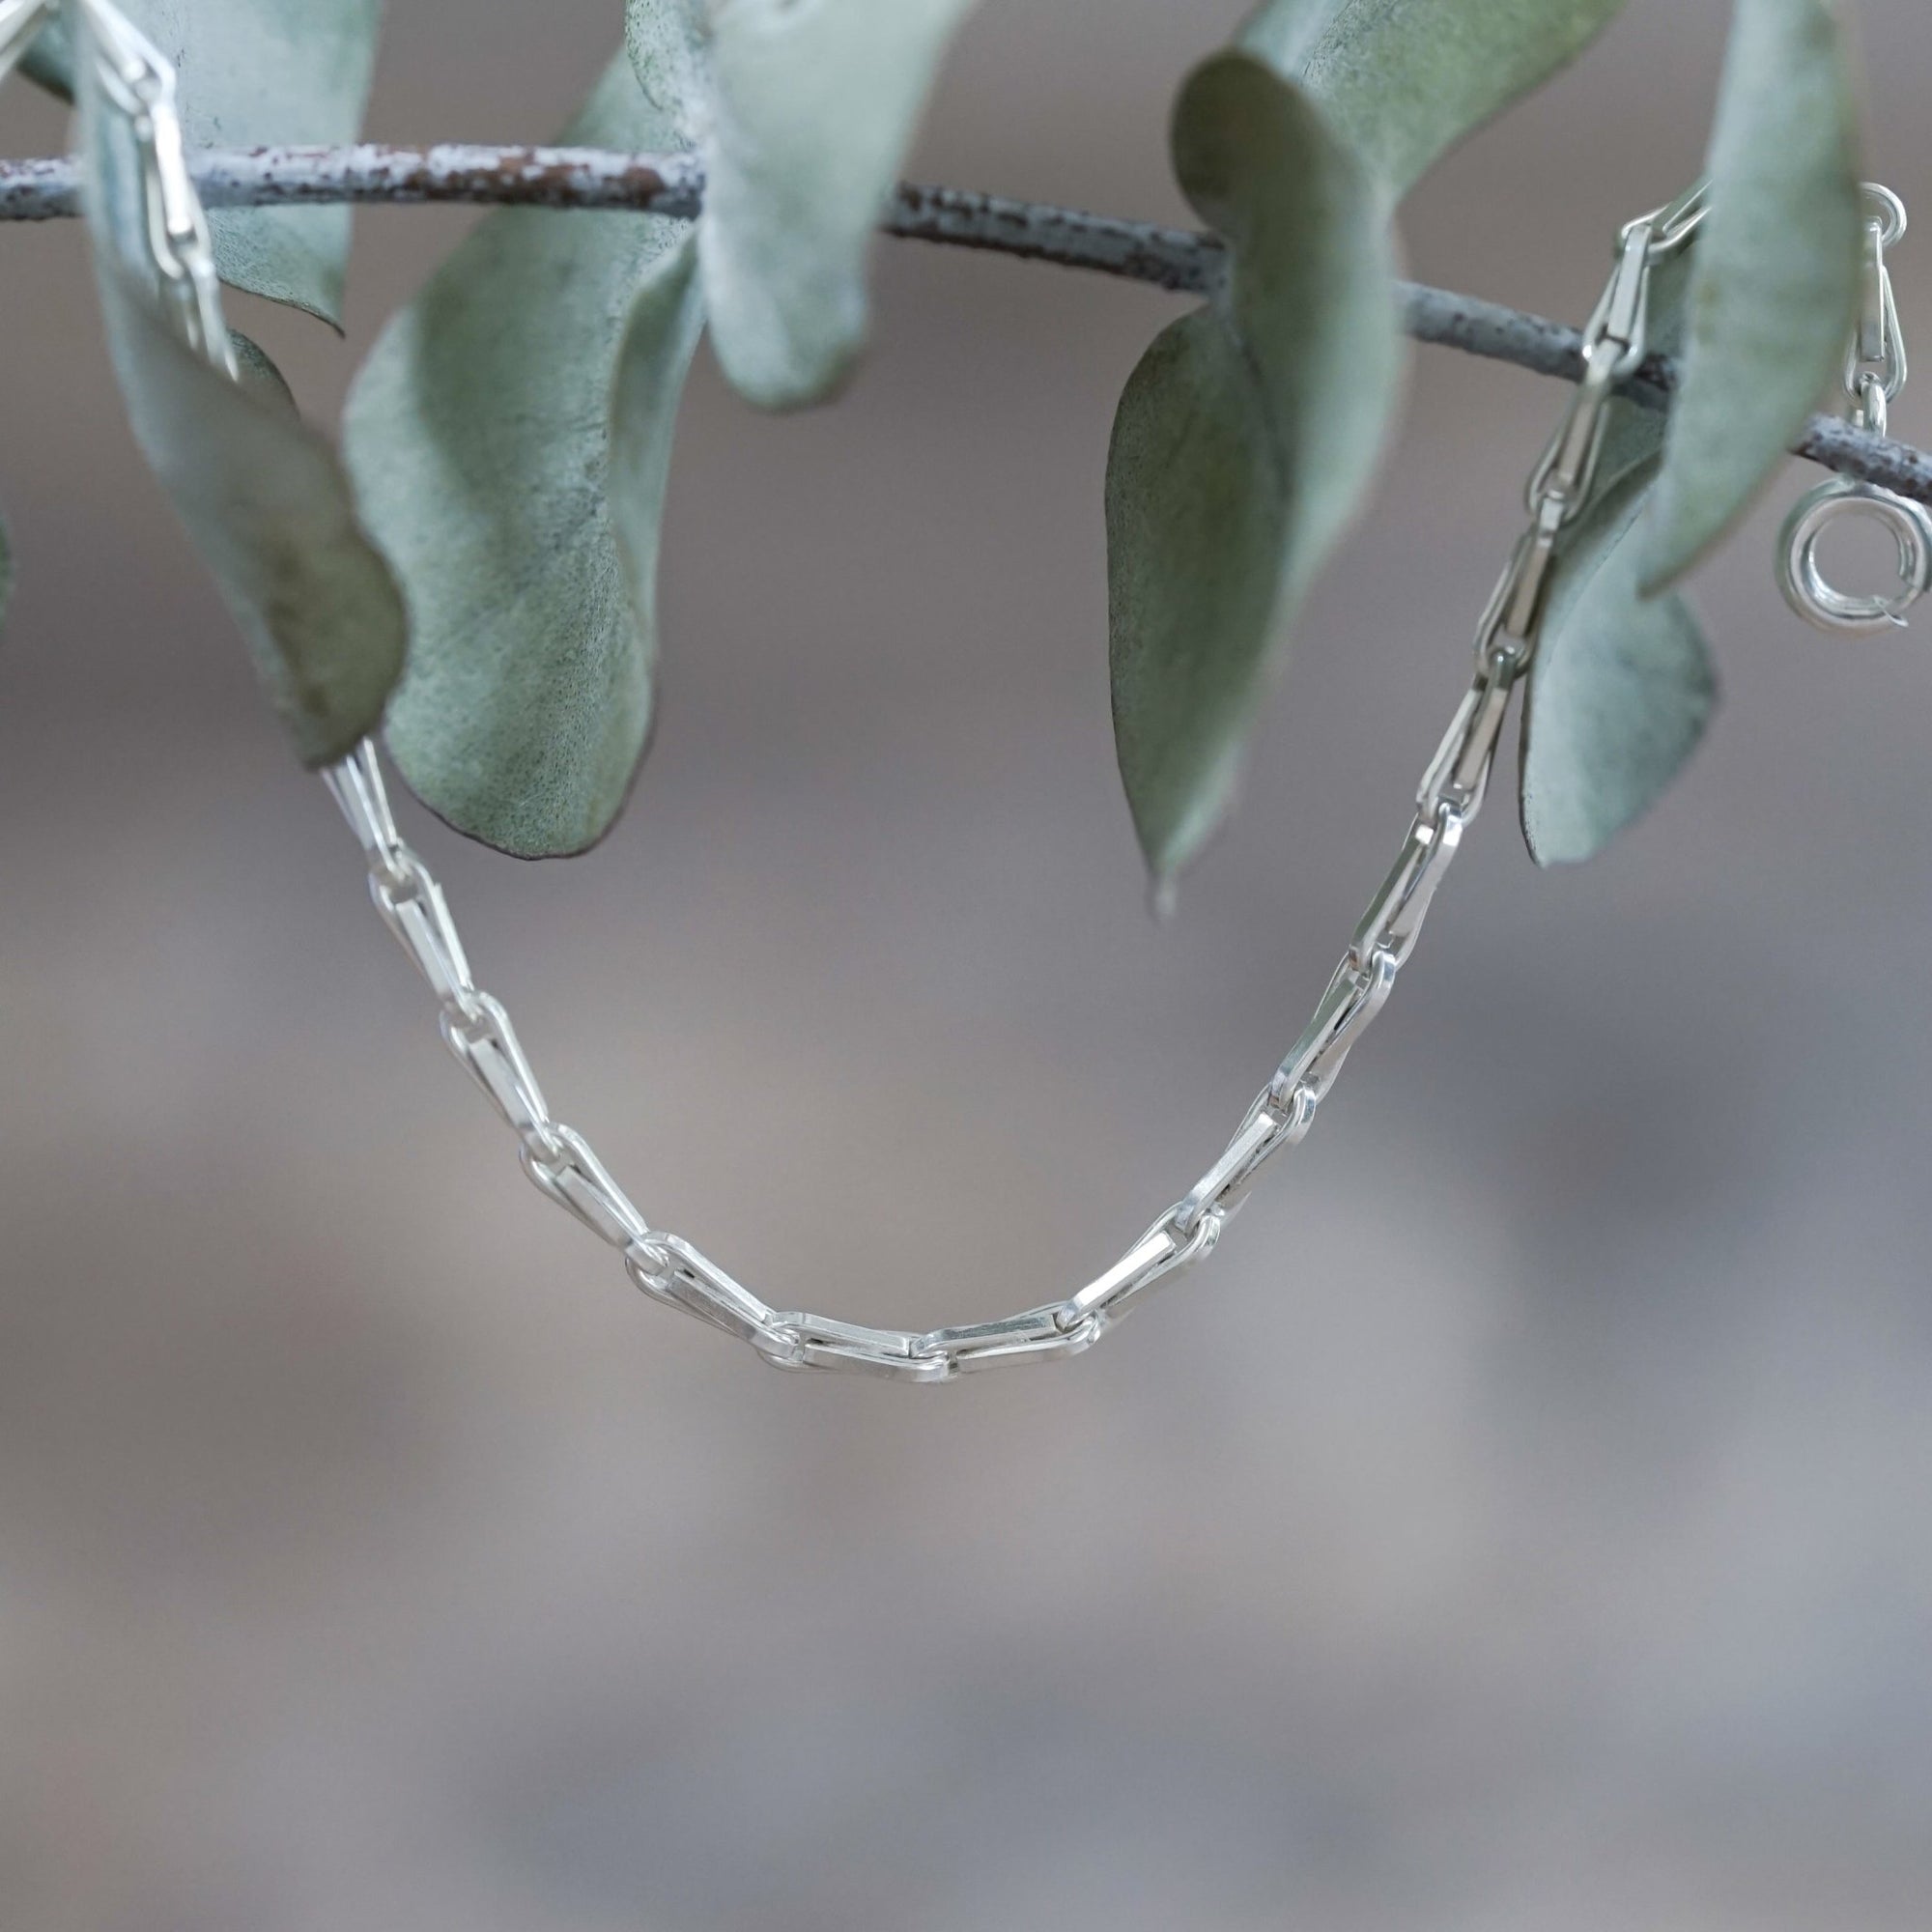 Barleycorn Chain Bracelet - Gardens of the Sun | Ethical Jewelry